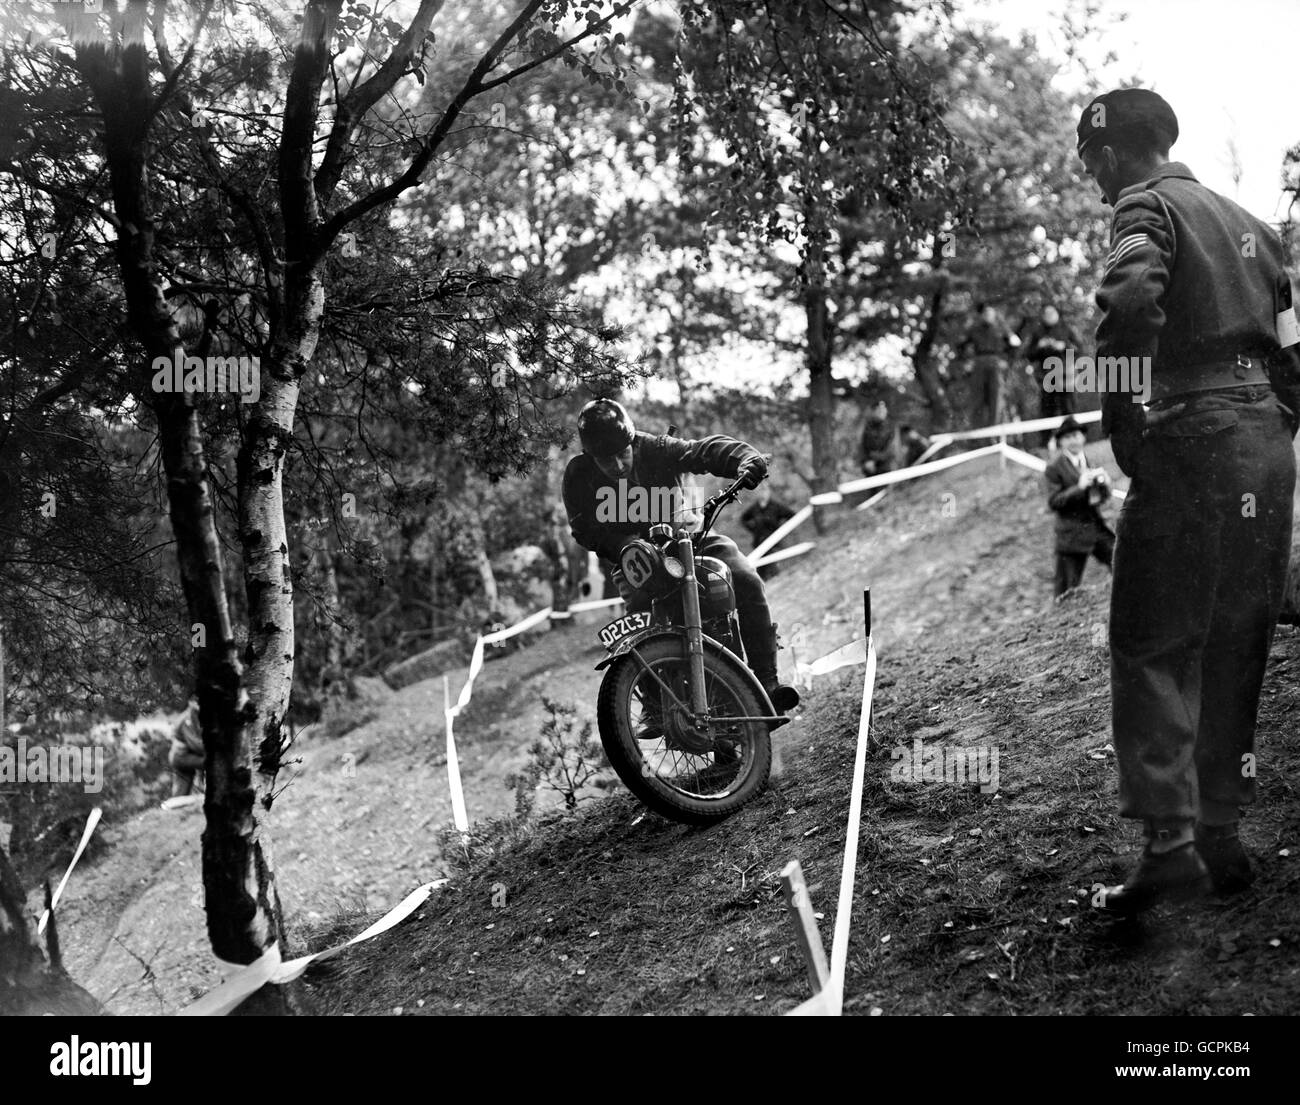 Motorcycling - Army Championship Trials - British Army v Swedish Army - Blackdown Stock Photo